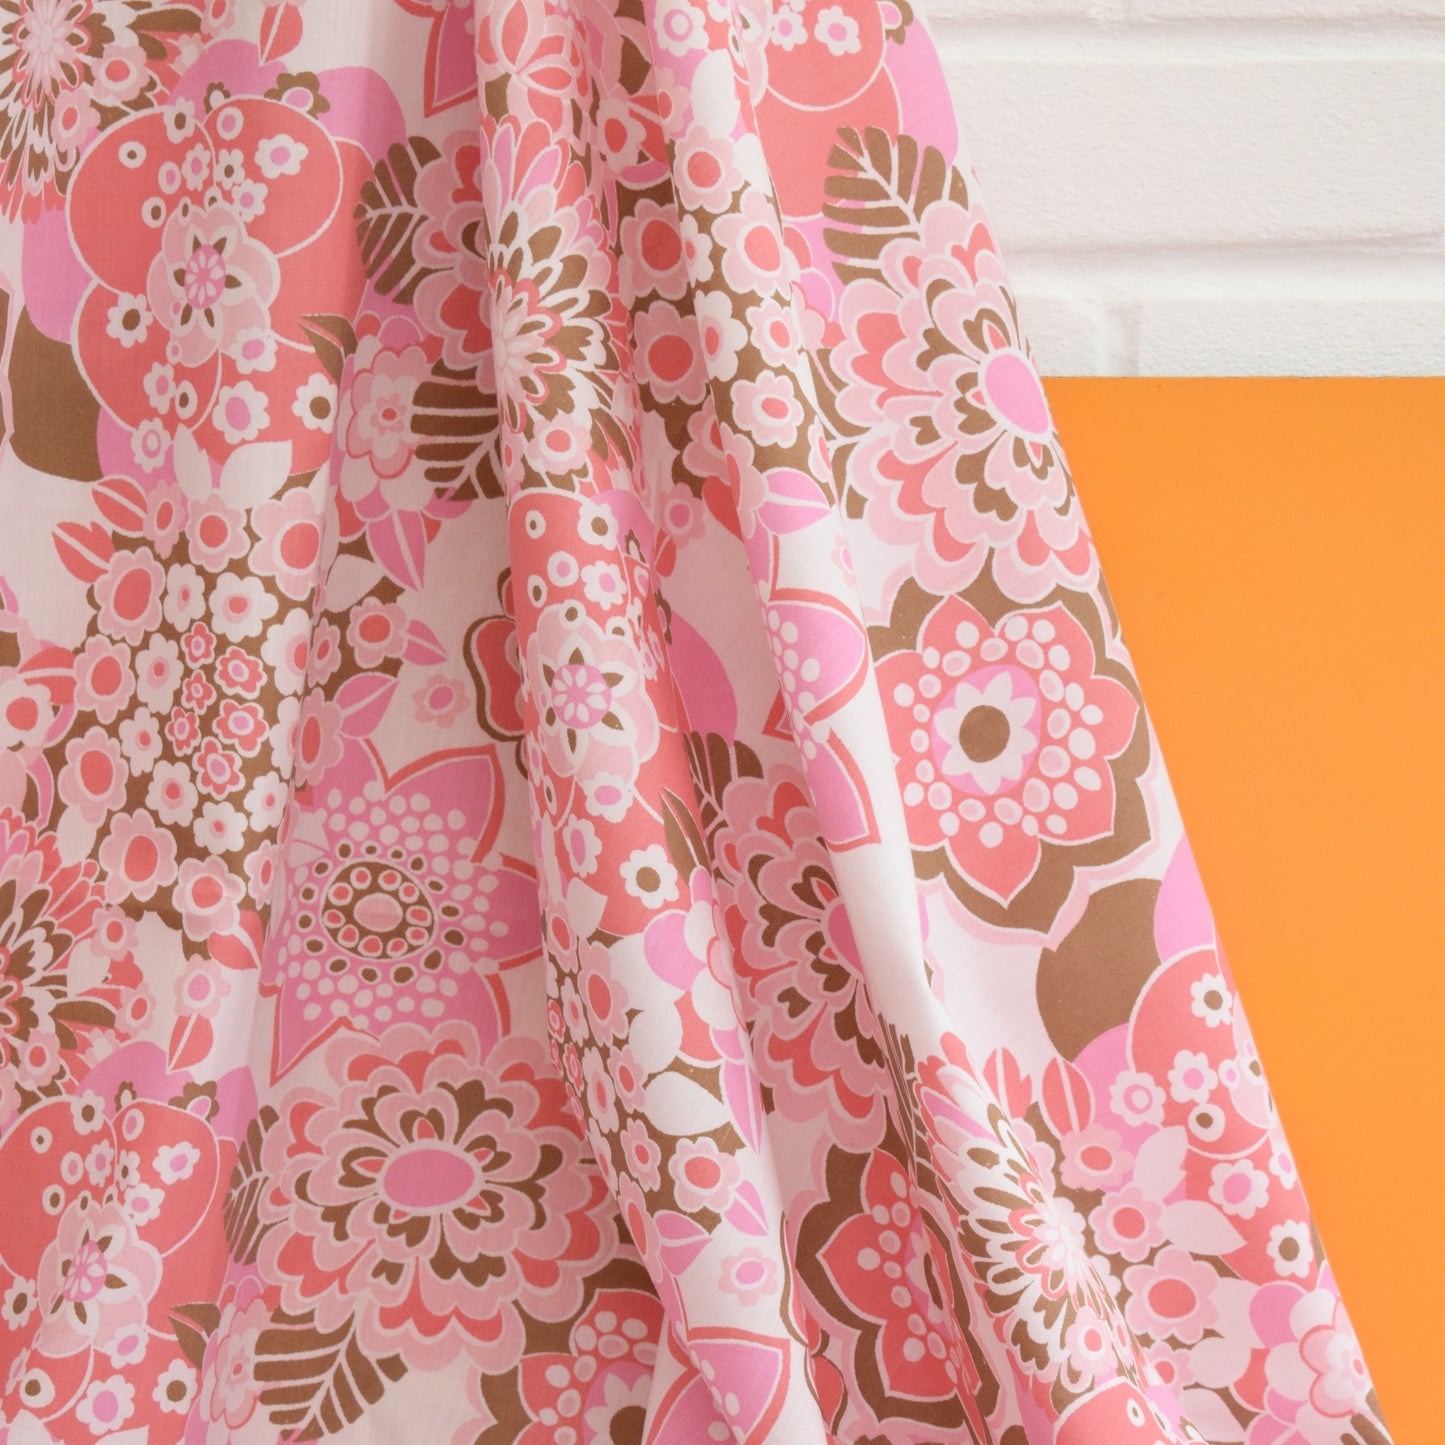 Vintage 1970s Sheet / Fabric - Flower Power - Pink